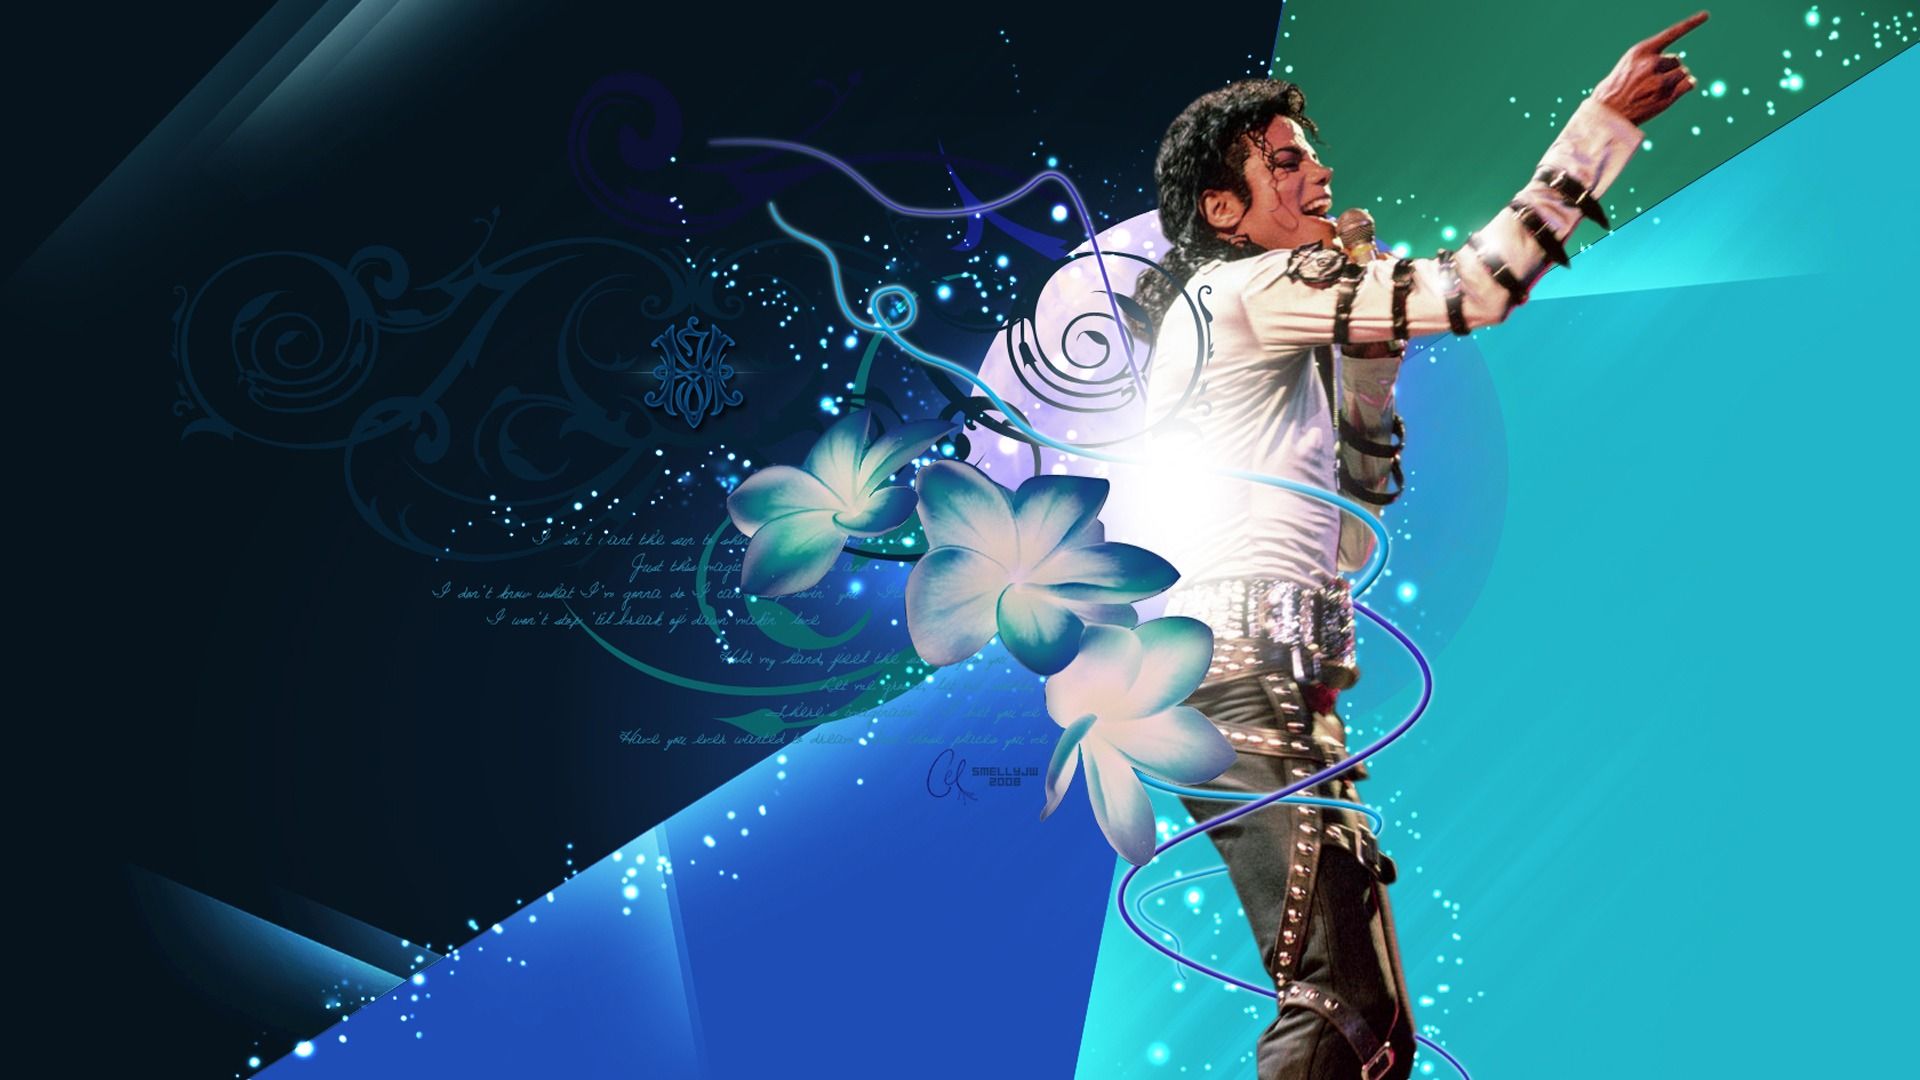 Michael Jackson Wallpaper Michael Jackson Male celebrities Wallpaper in jpg format for free download